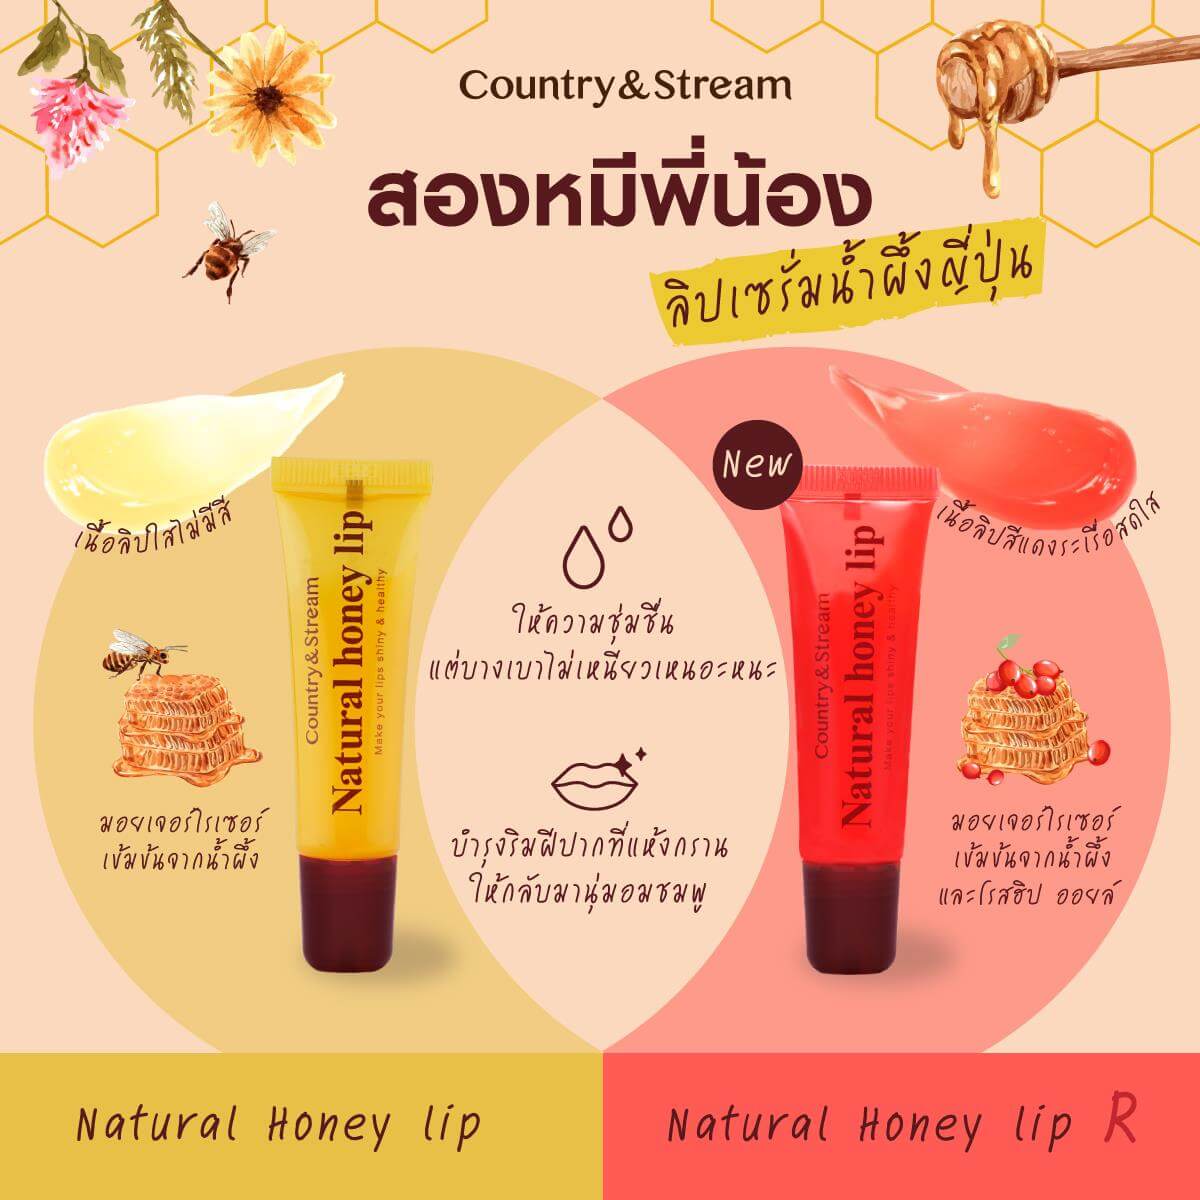 Country&Stream Natural Honey Lip R 10 g ลิปเซรั่มน้ำผึ้งญี่ปุ่น น้องใหม่! อุดมด้วยมอยเจอร์ไรเซอร์เข้มข้นขากน้ำผึ้งและโรสฮิปออยล์ บำรุงริมฝีปากแห้งกร้านให้กลับมานุ่มอมชมพู